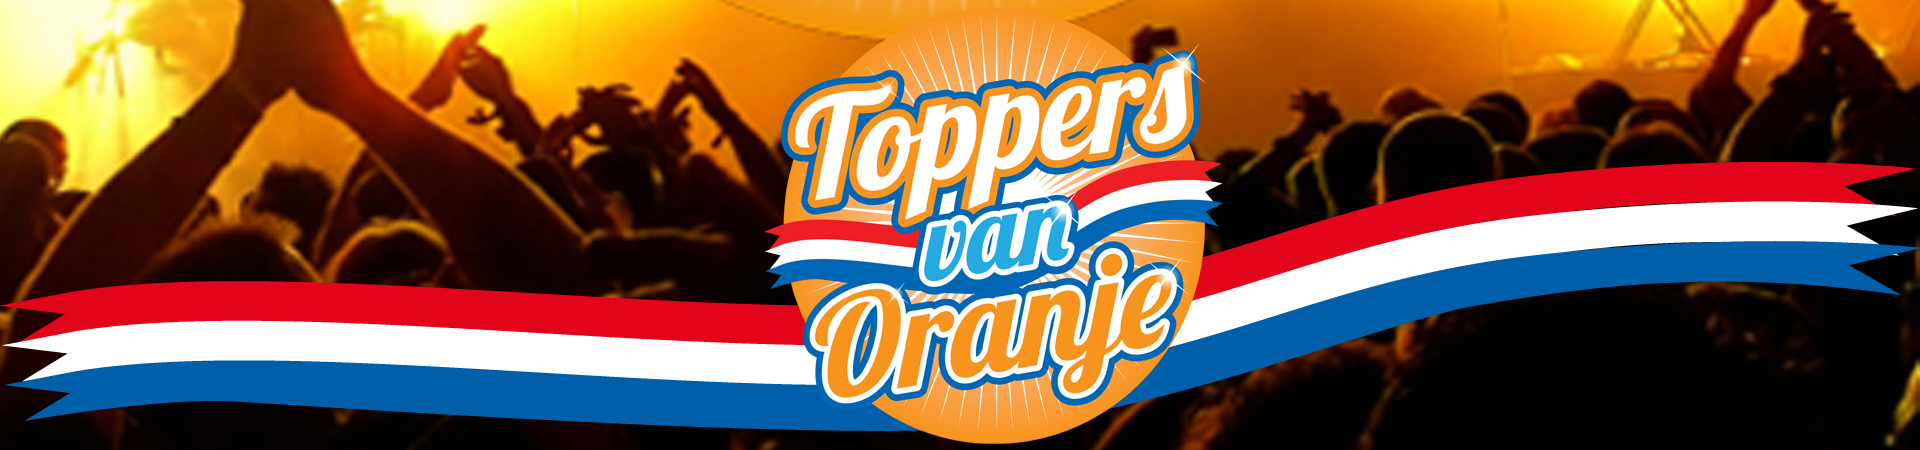 Toppers van Oranje E-tickets